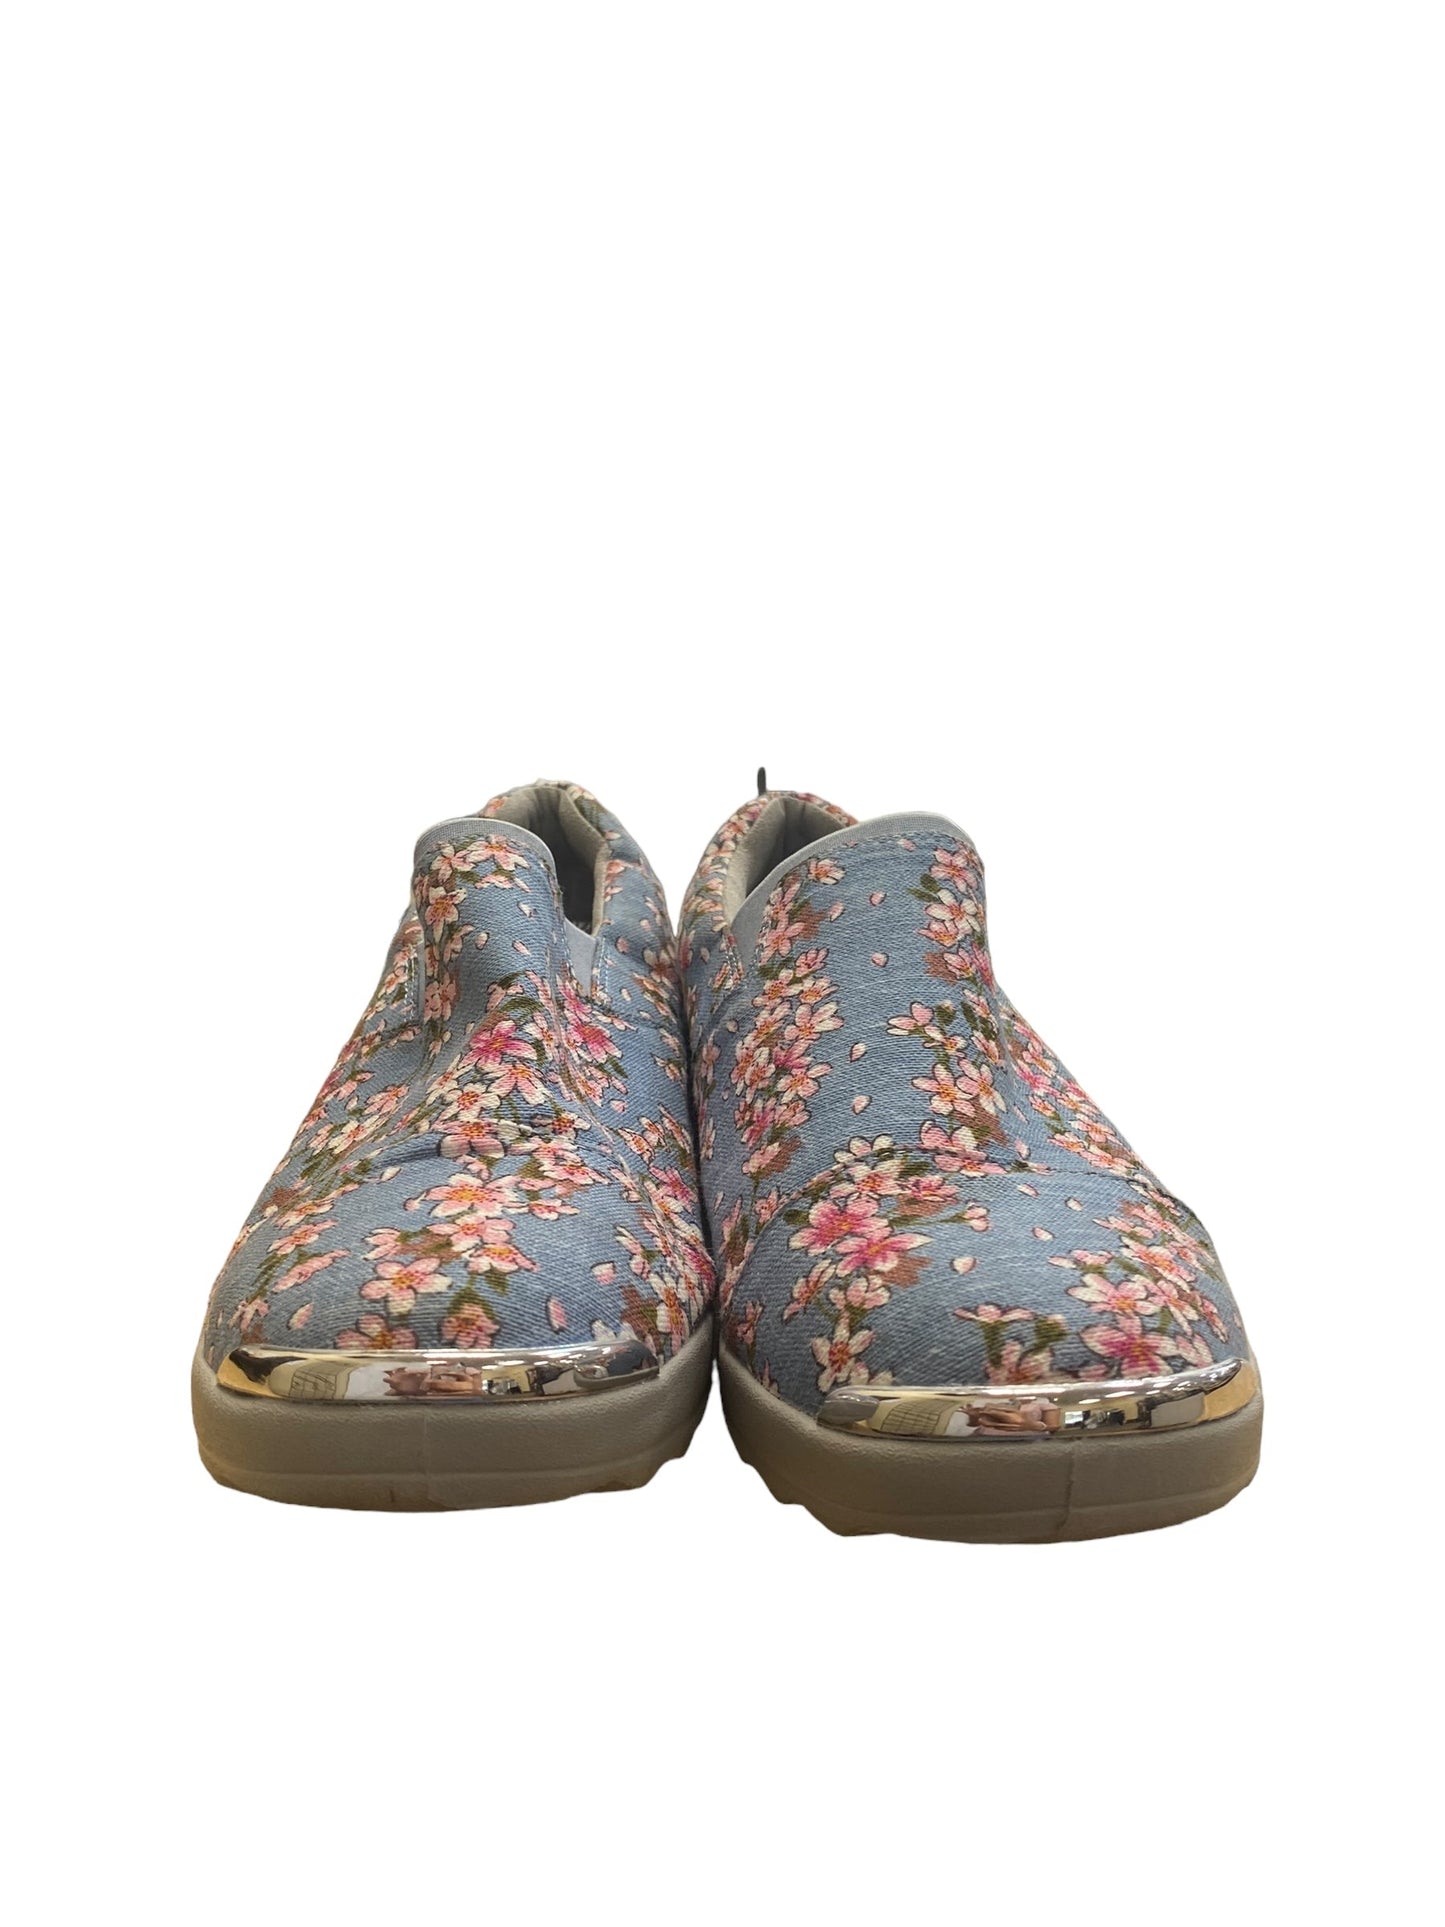 Floral Print Shoes Flats Clothes Mentor, Size 7.5